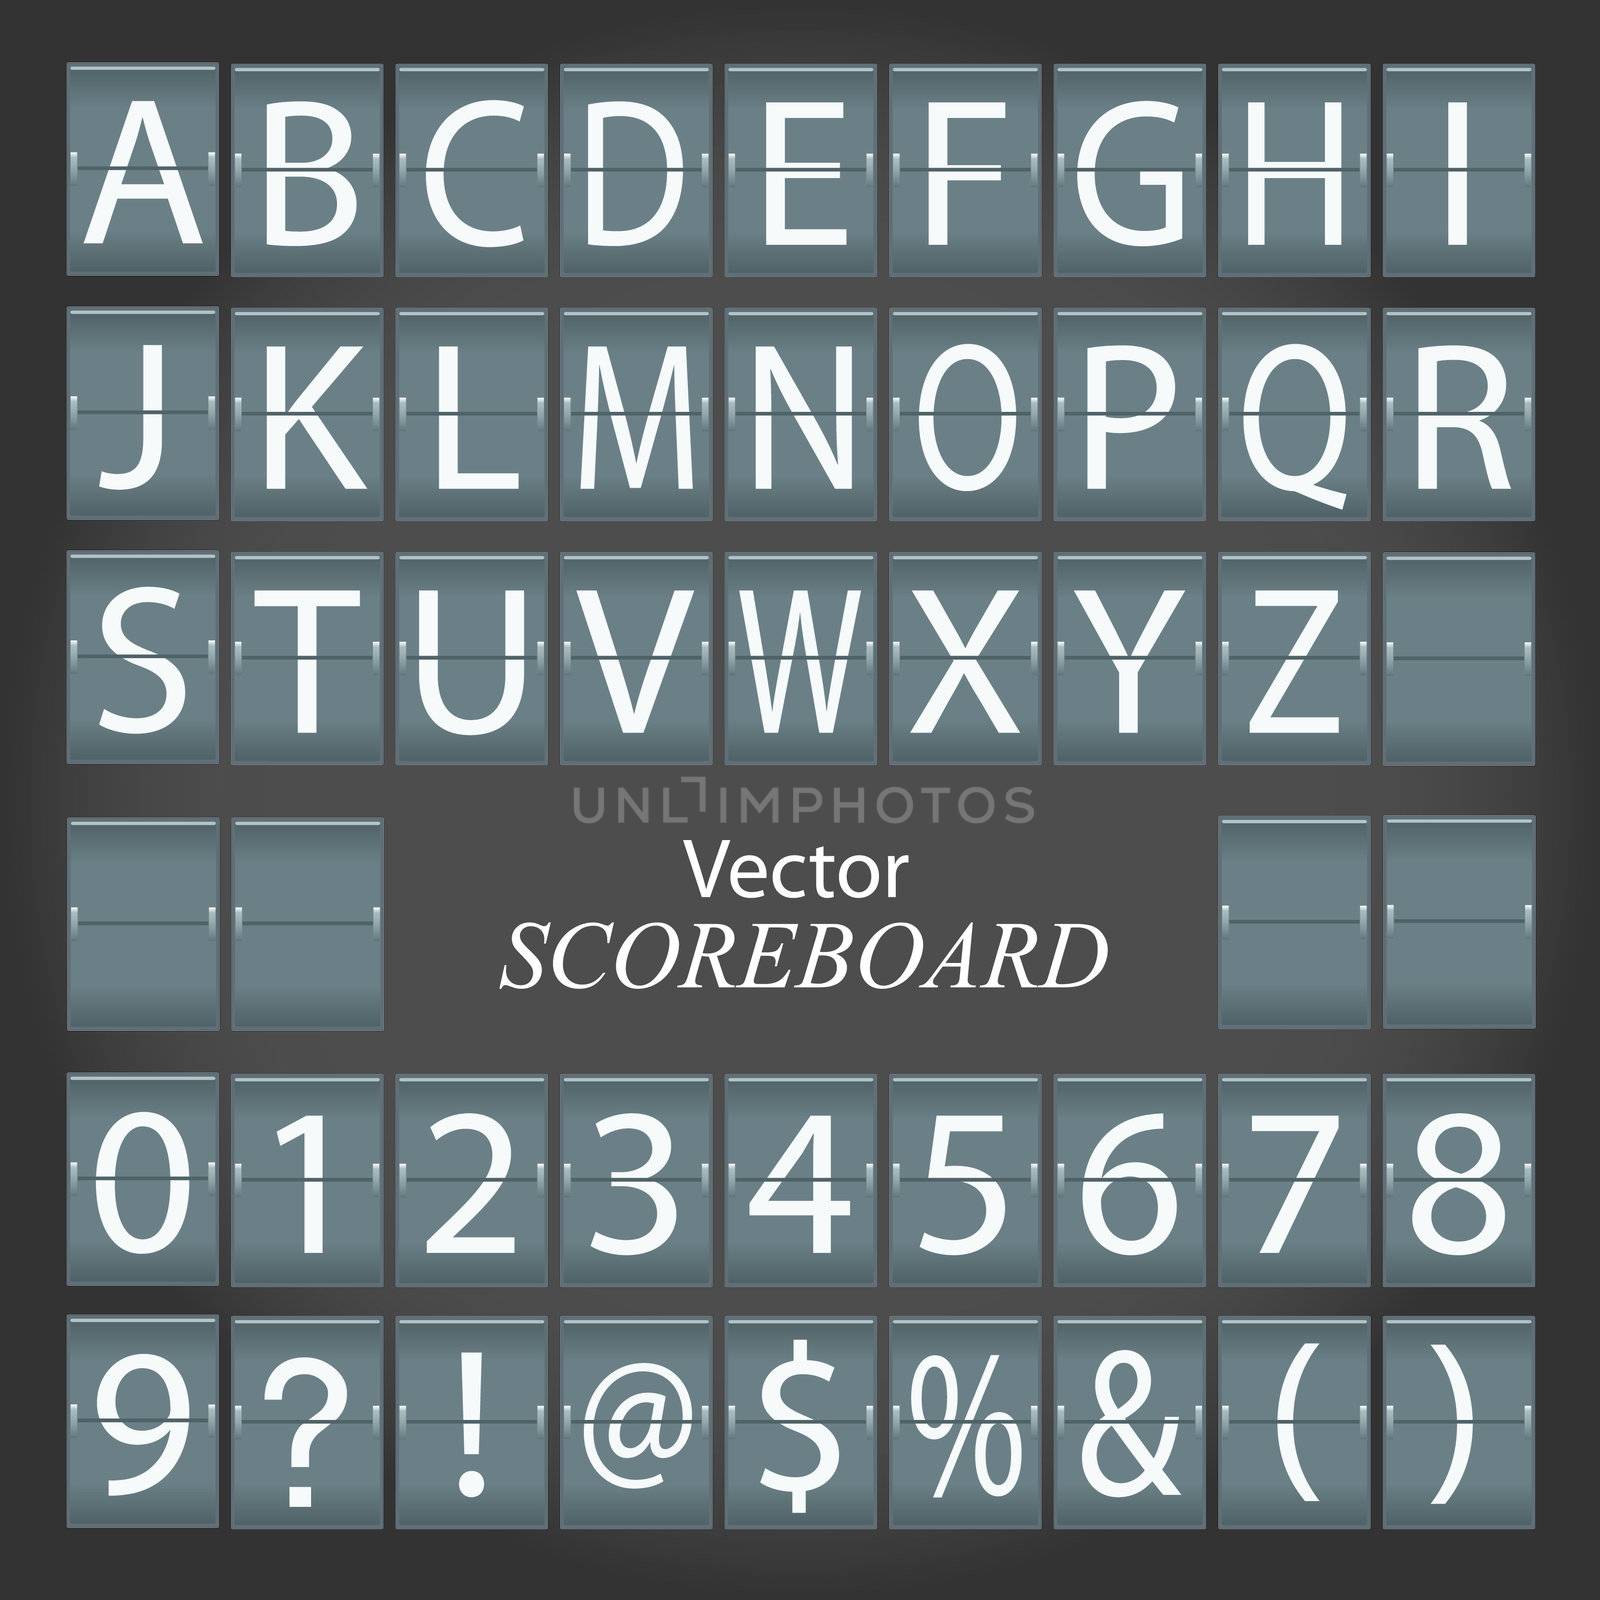 Image of a vector scoreboard.